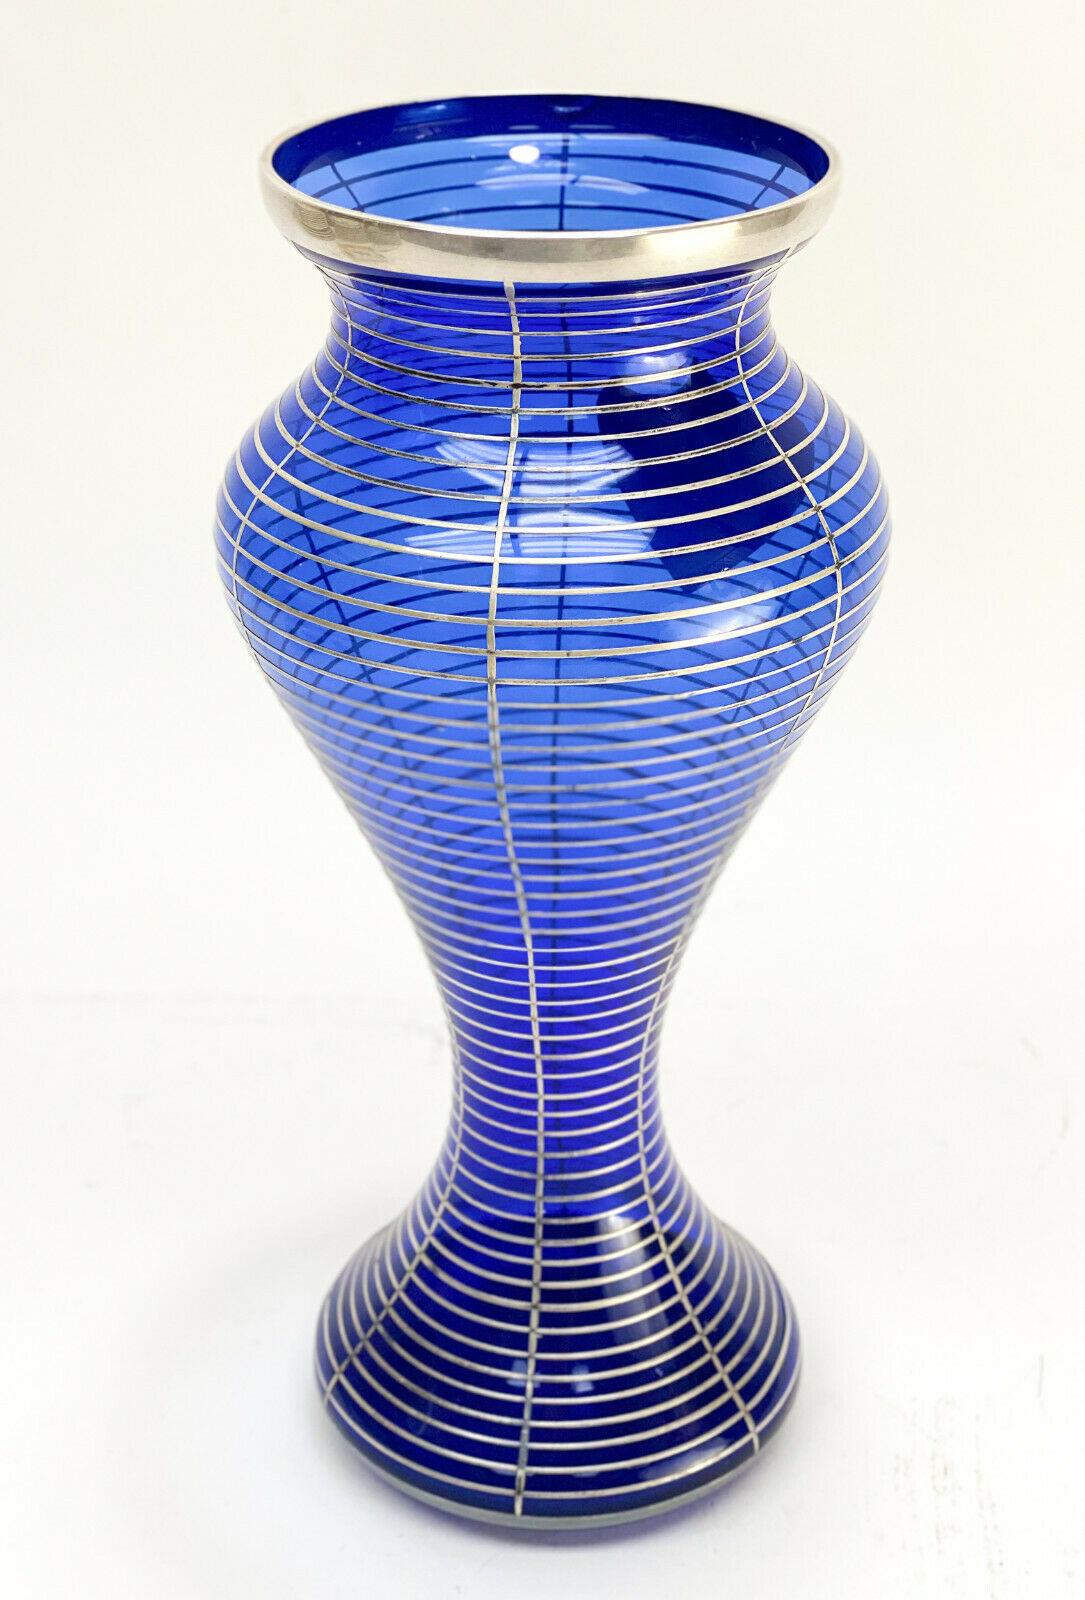 American La Pierre Silver Overlay Cobalt Blue Glass Vase, circa 1910 In Good Condition For Sale In Gardena, CA